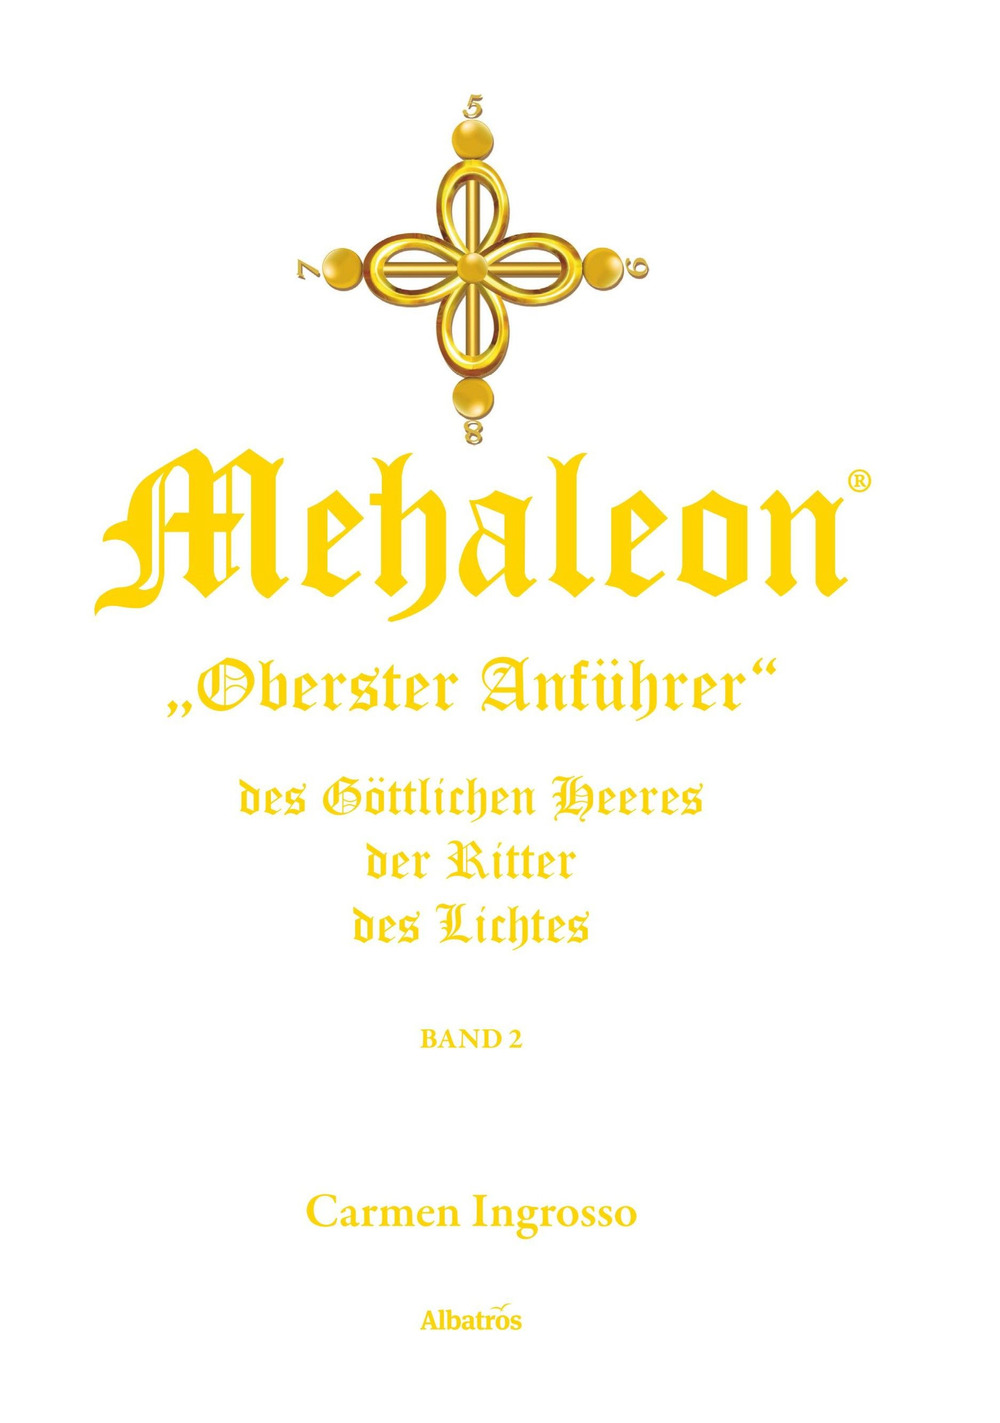 Mehaleon band